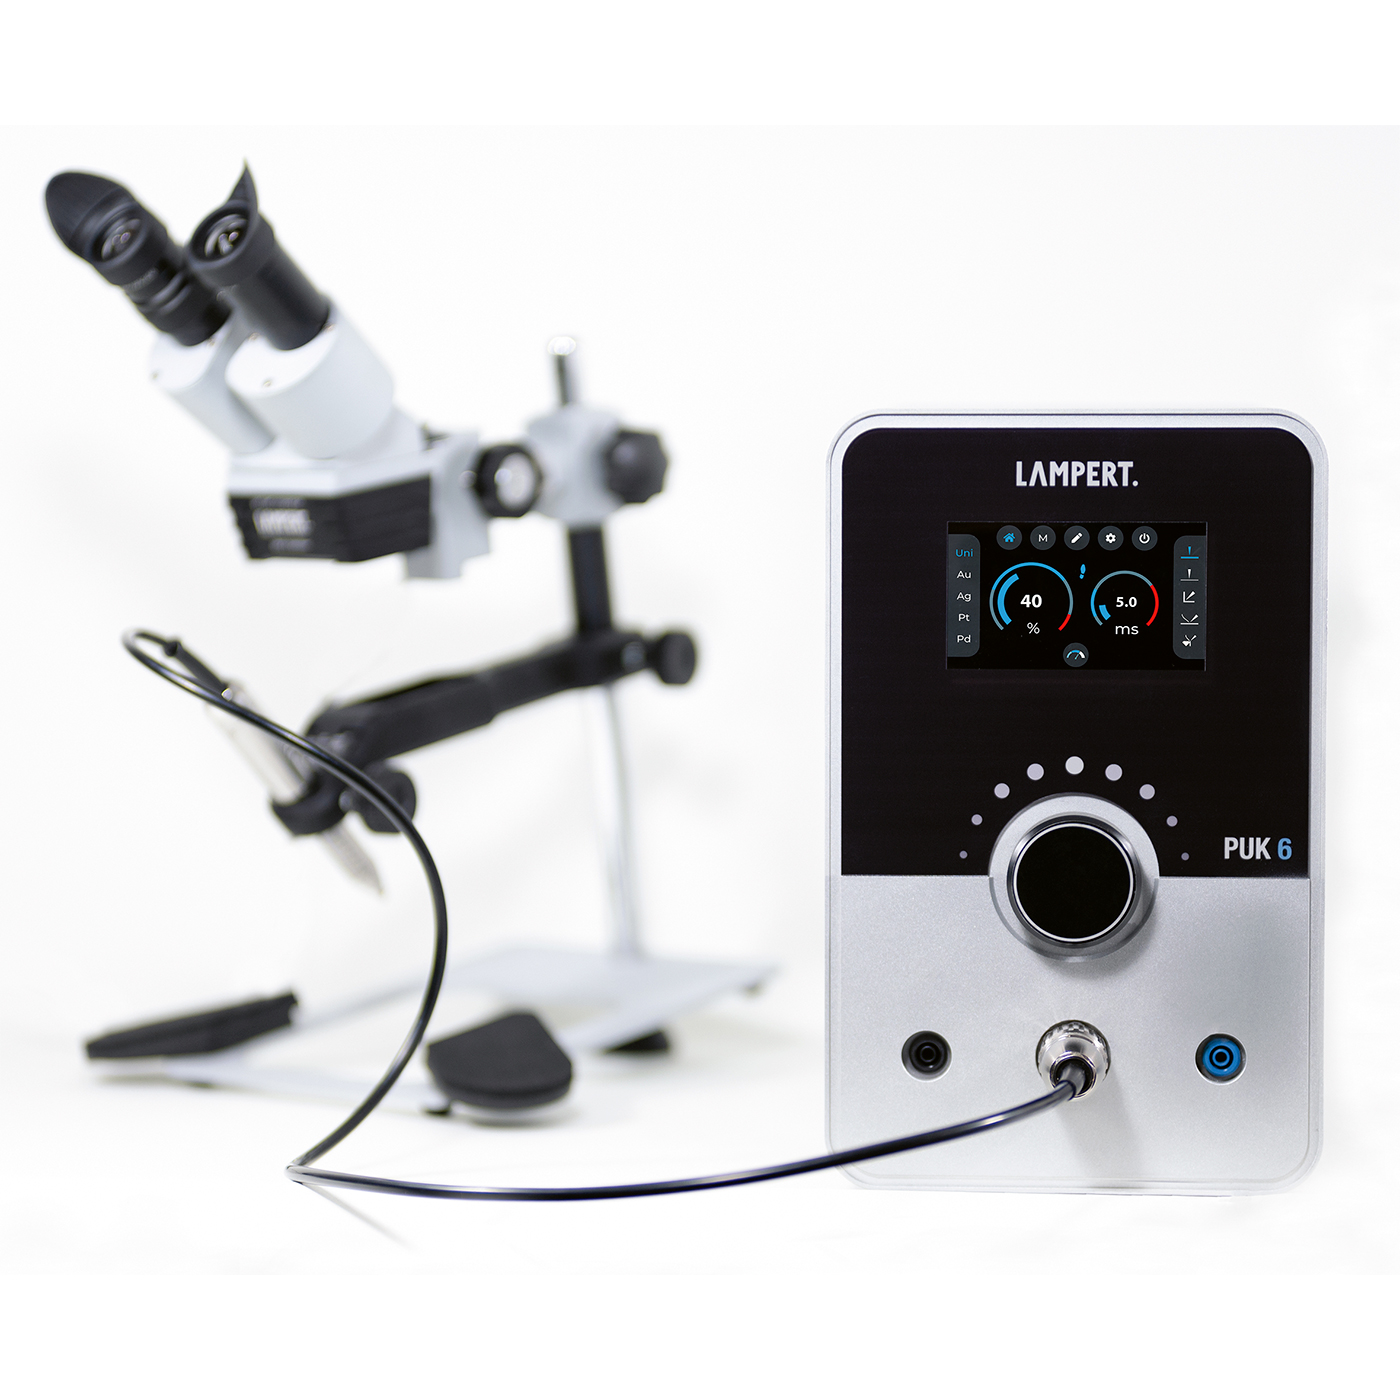 Lampert Puk 6 Feinschweißgerät, mit SM 6 Schweißmikroskop - 1 Stück